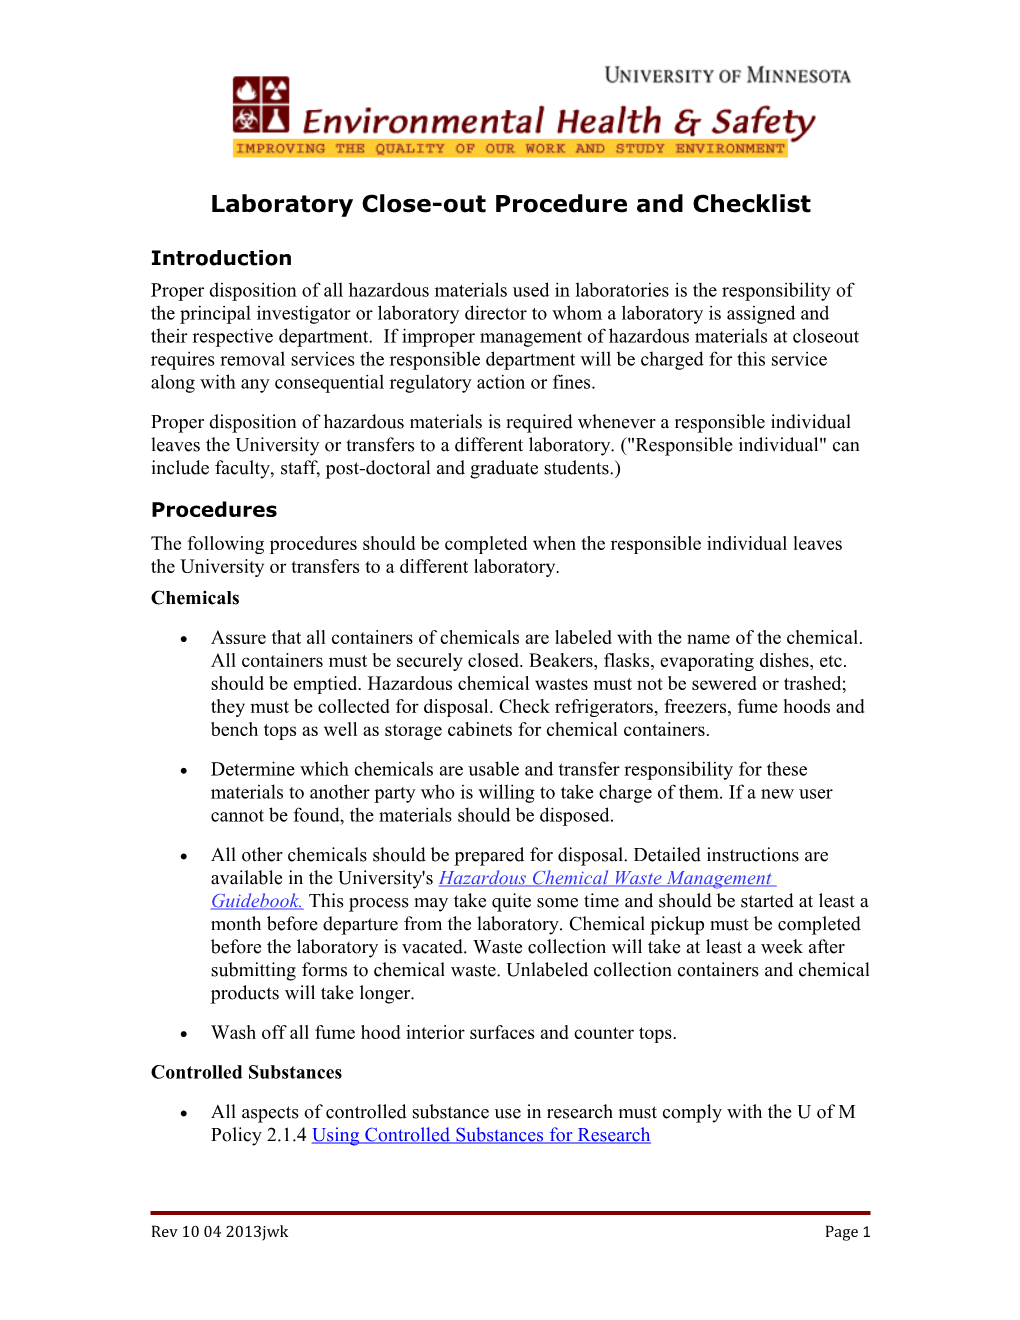 Laboratory Close-Out Procedure and Checklist